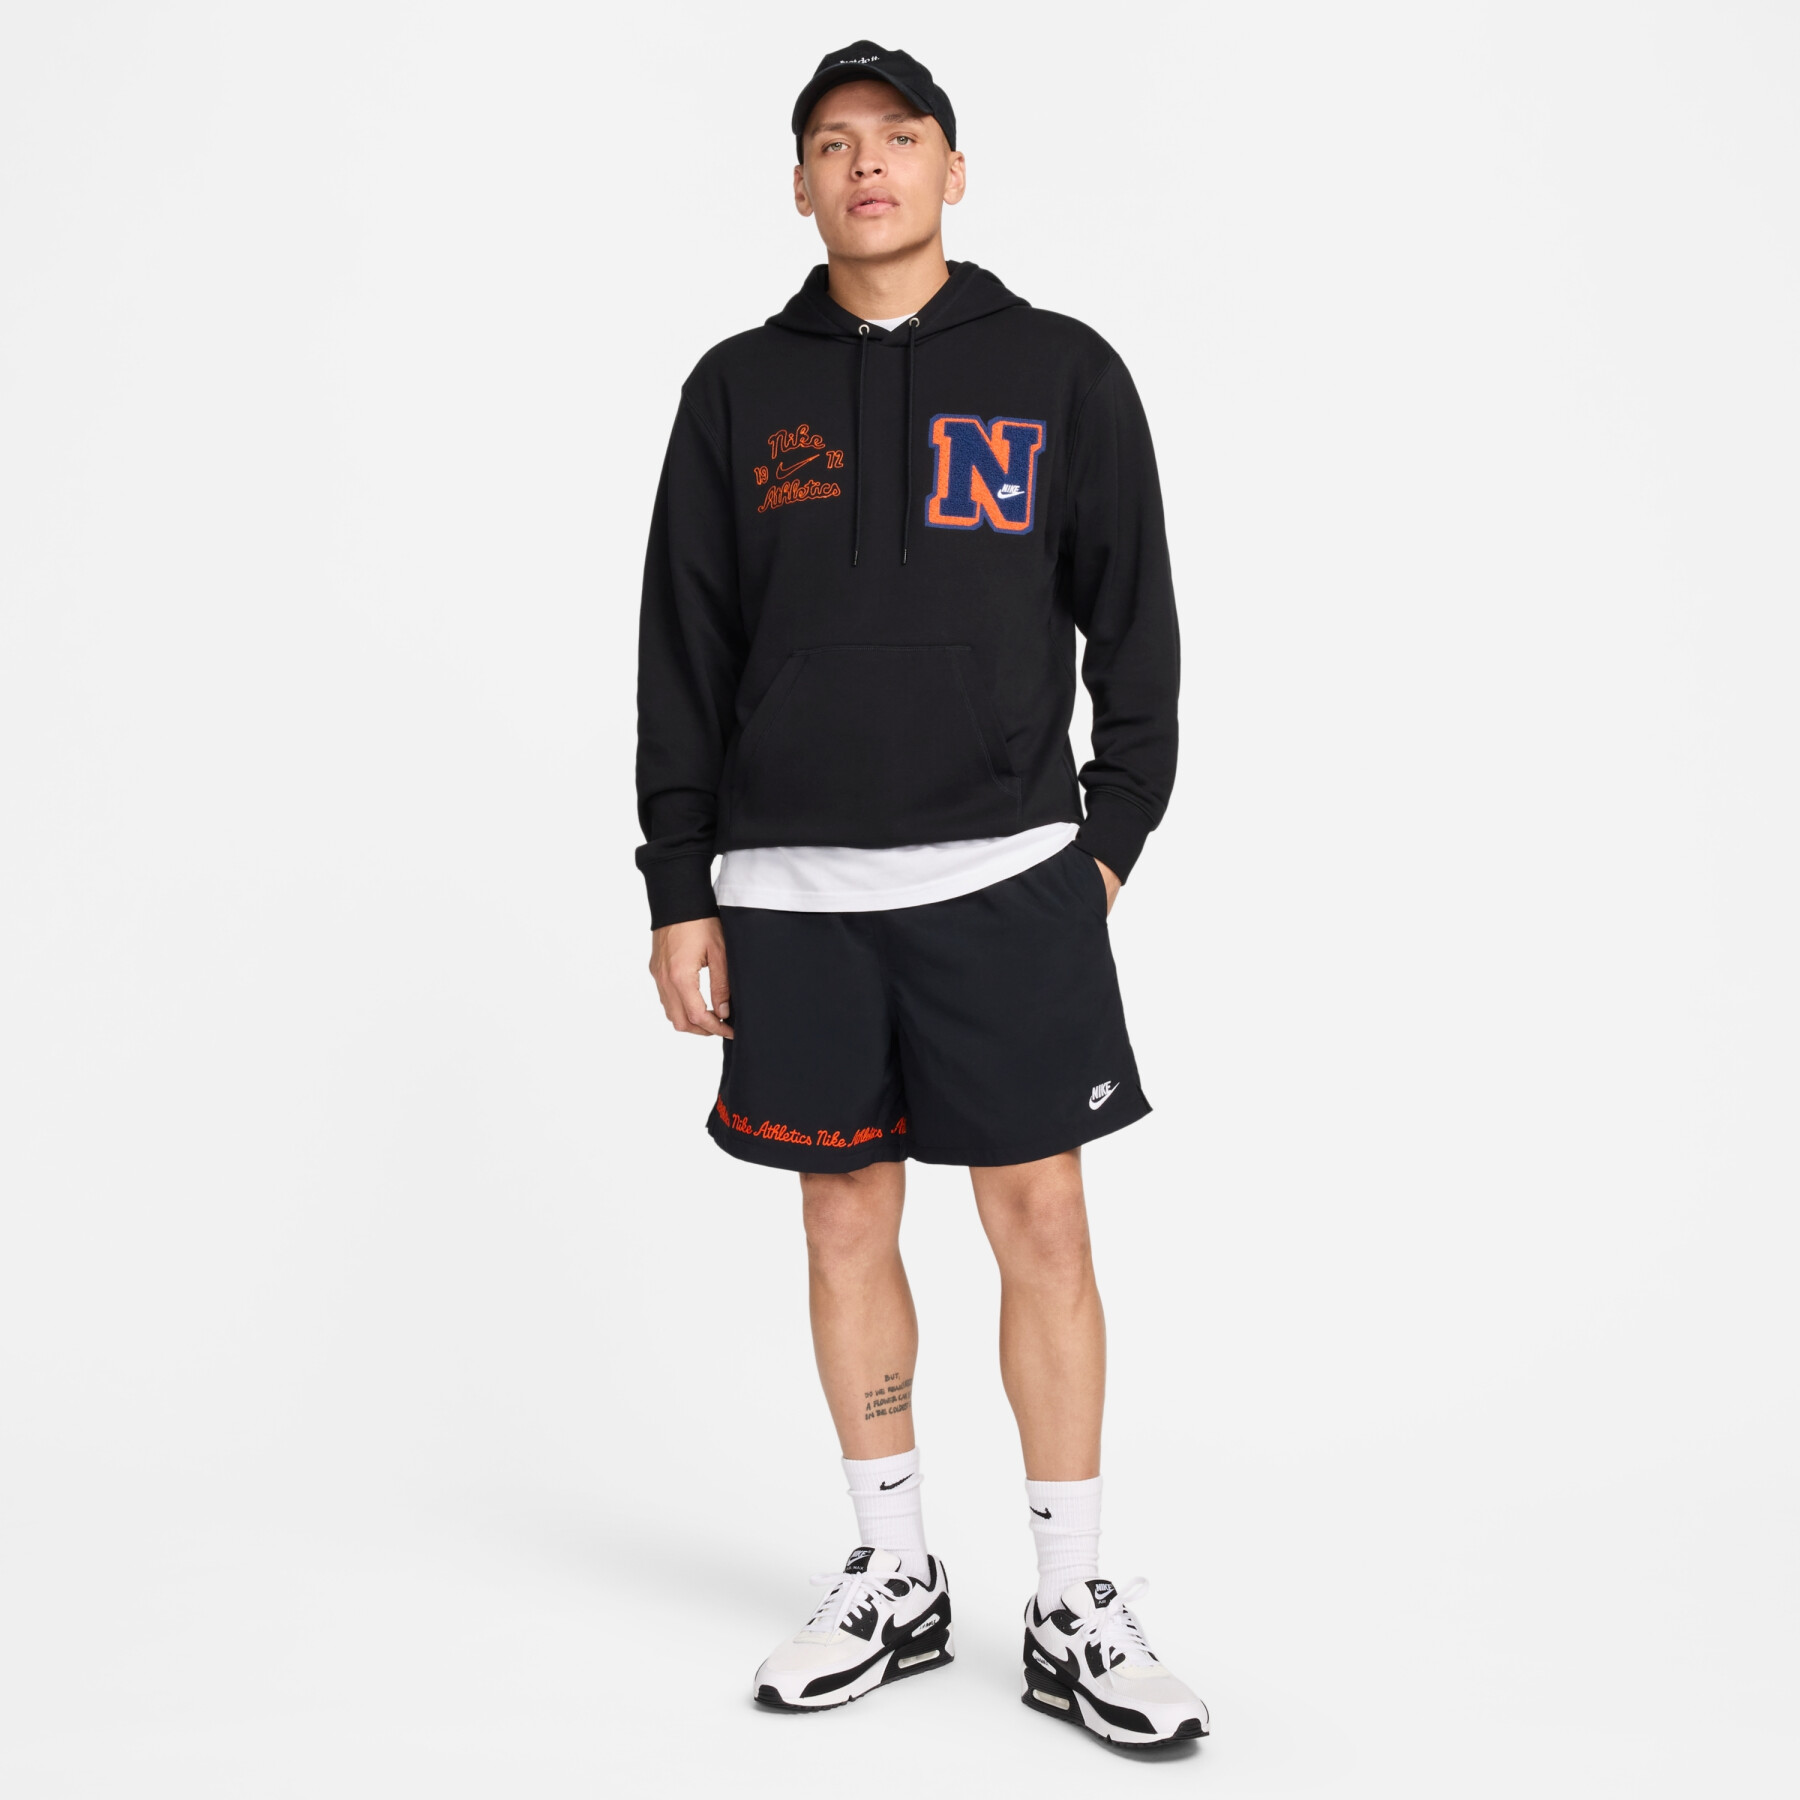 Hooded sweatshirt Nike Club